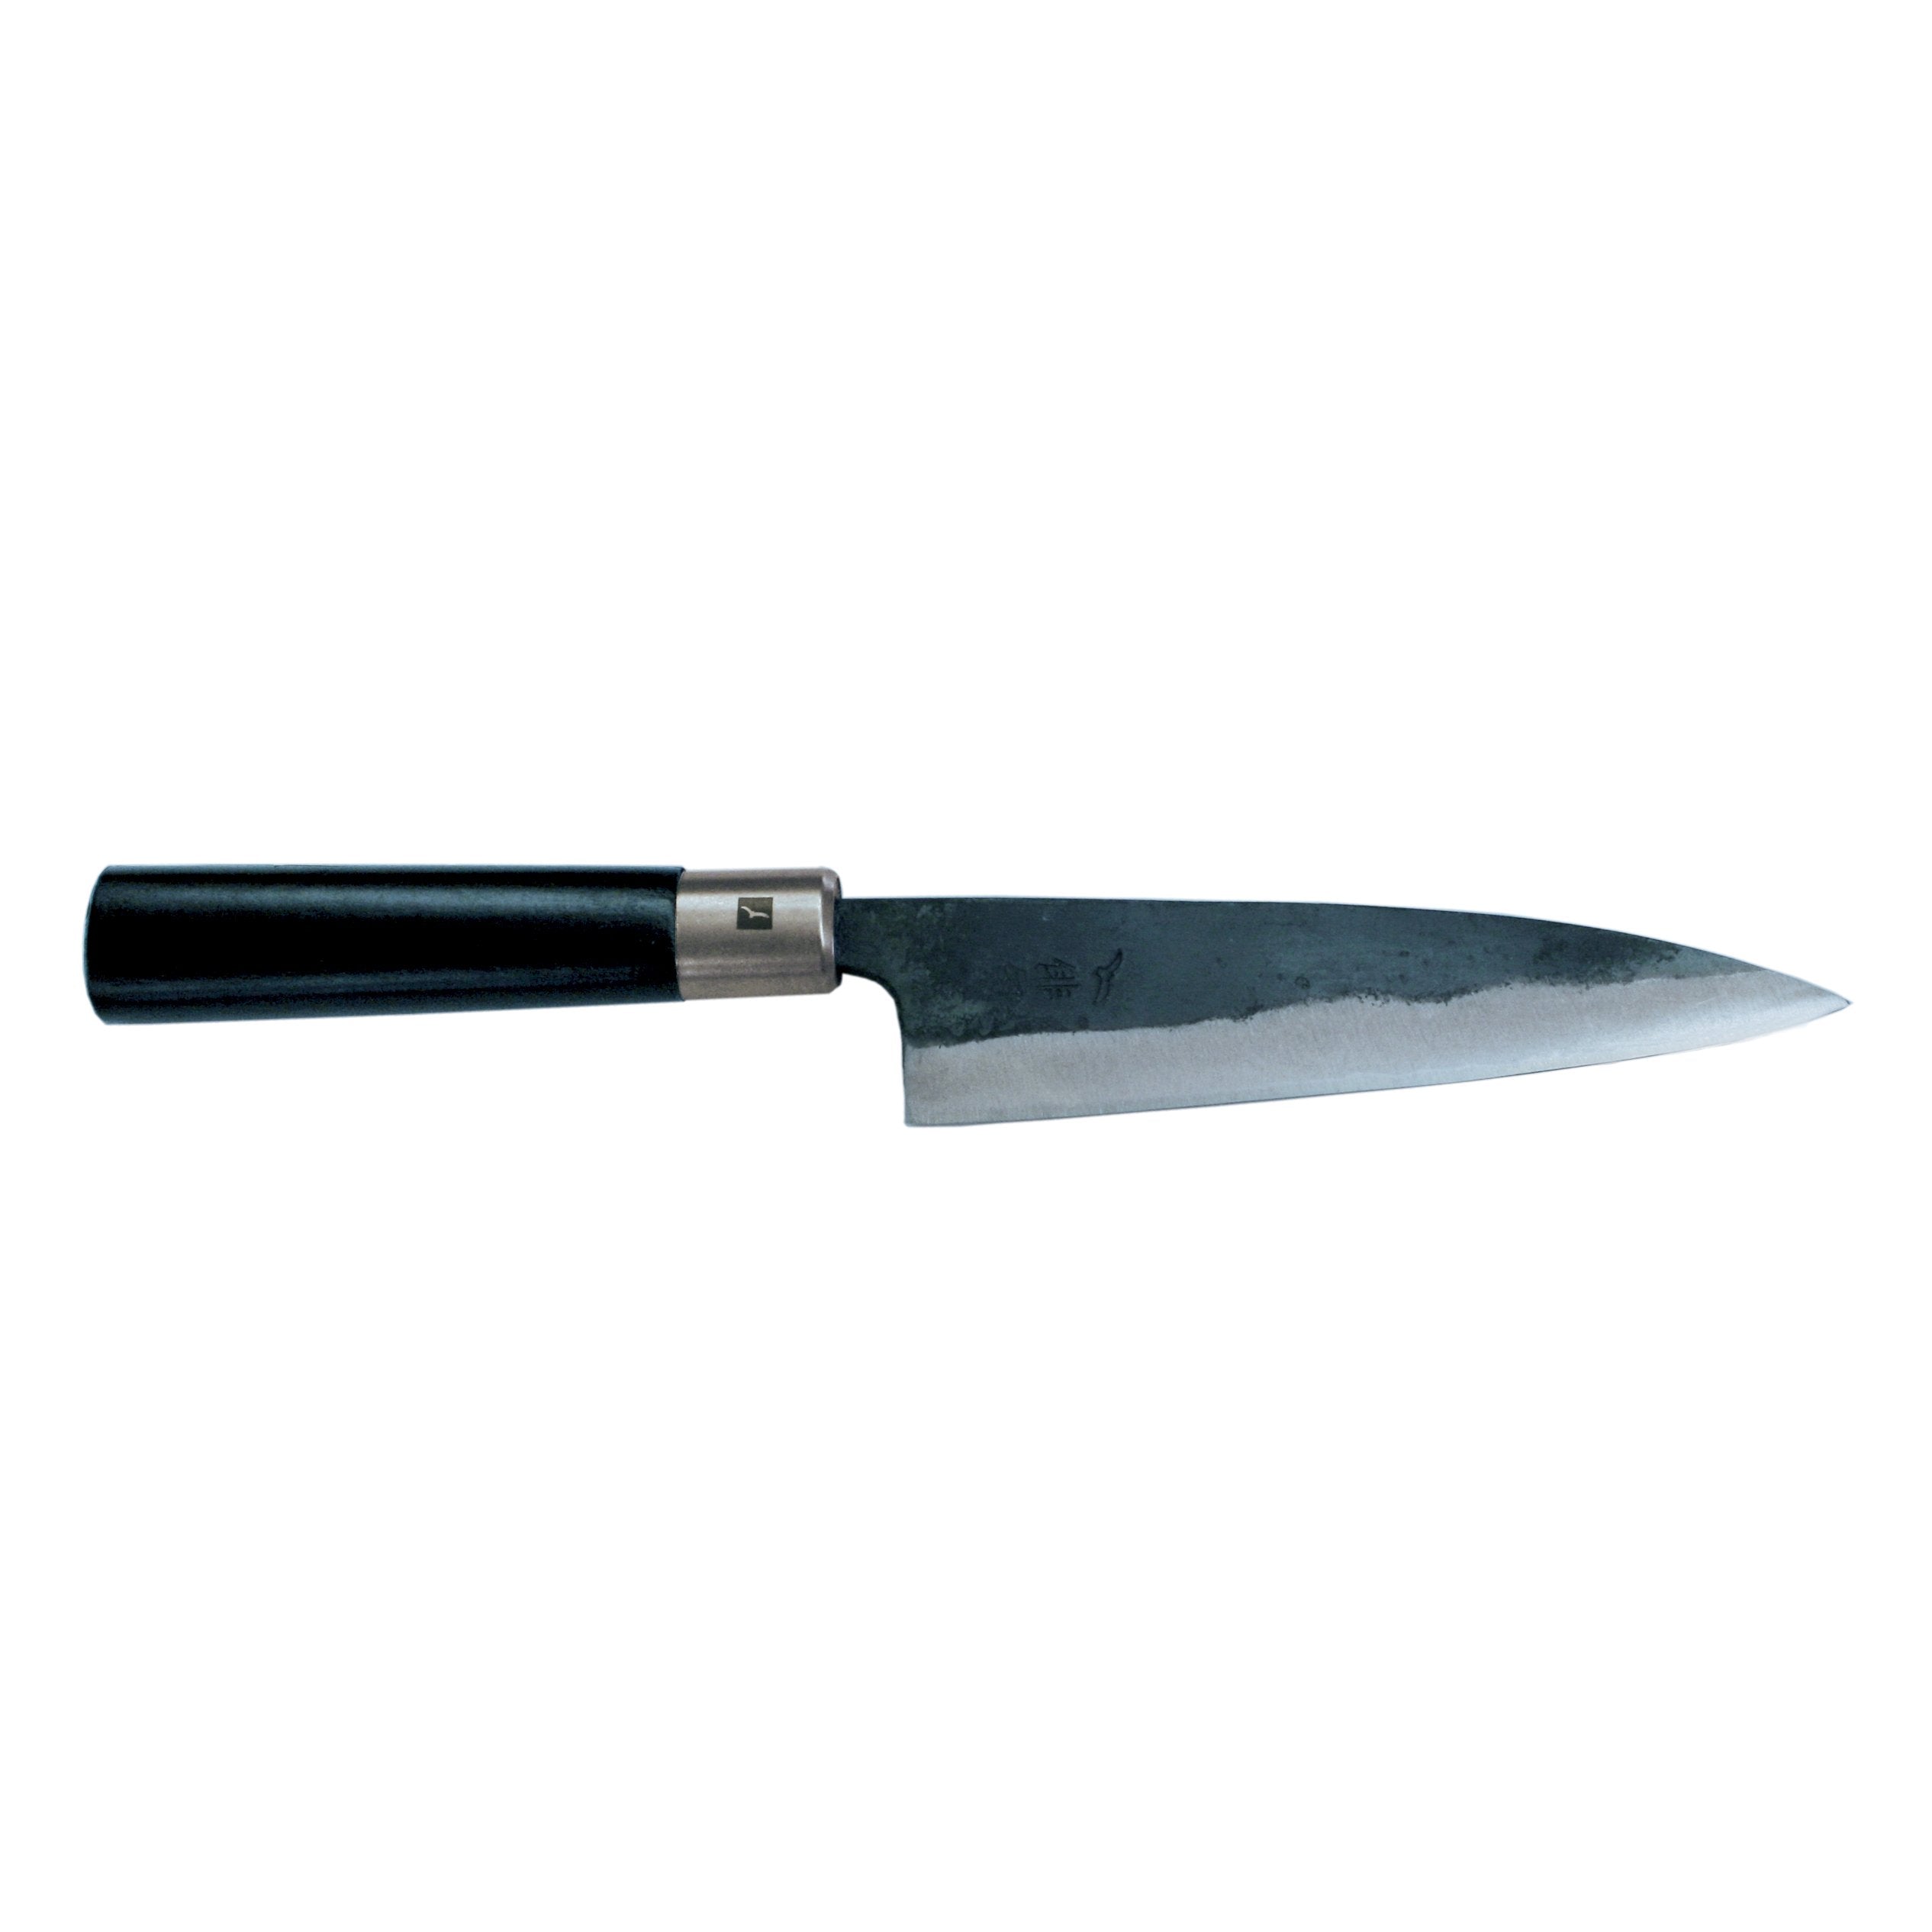  WonderWorker Sharp Stainless-Steel Knife Sharpener, Three Stage  Sharpening System, Ergonomically Designed Handle